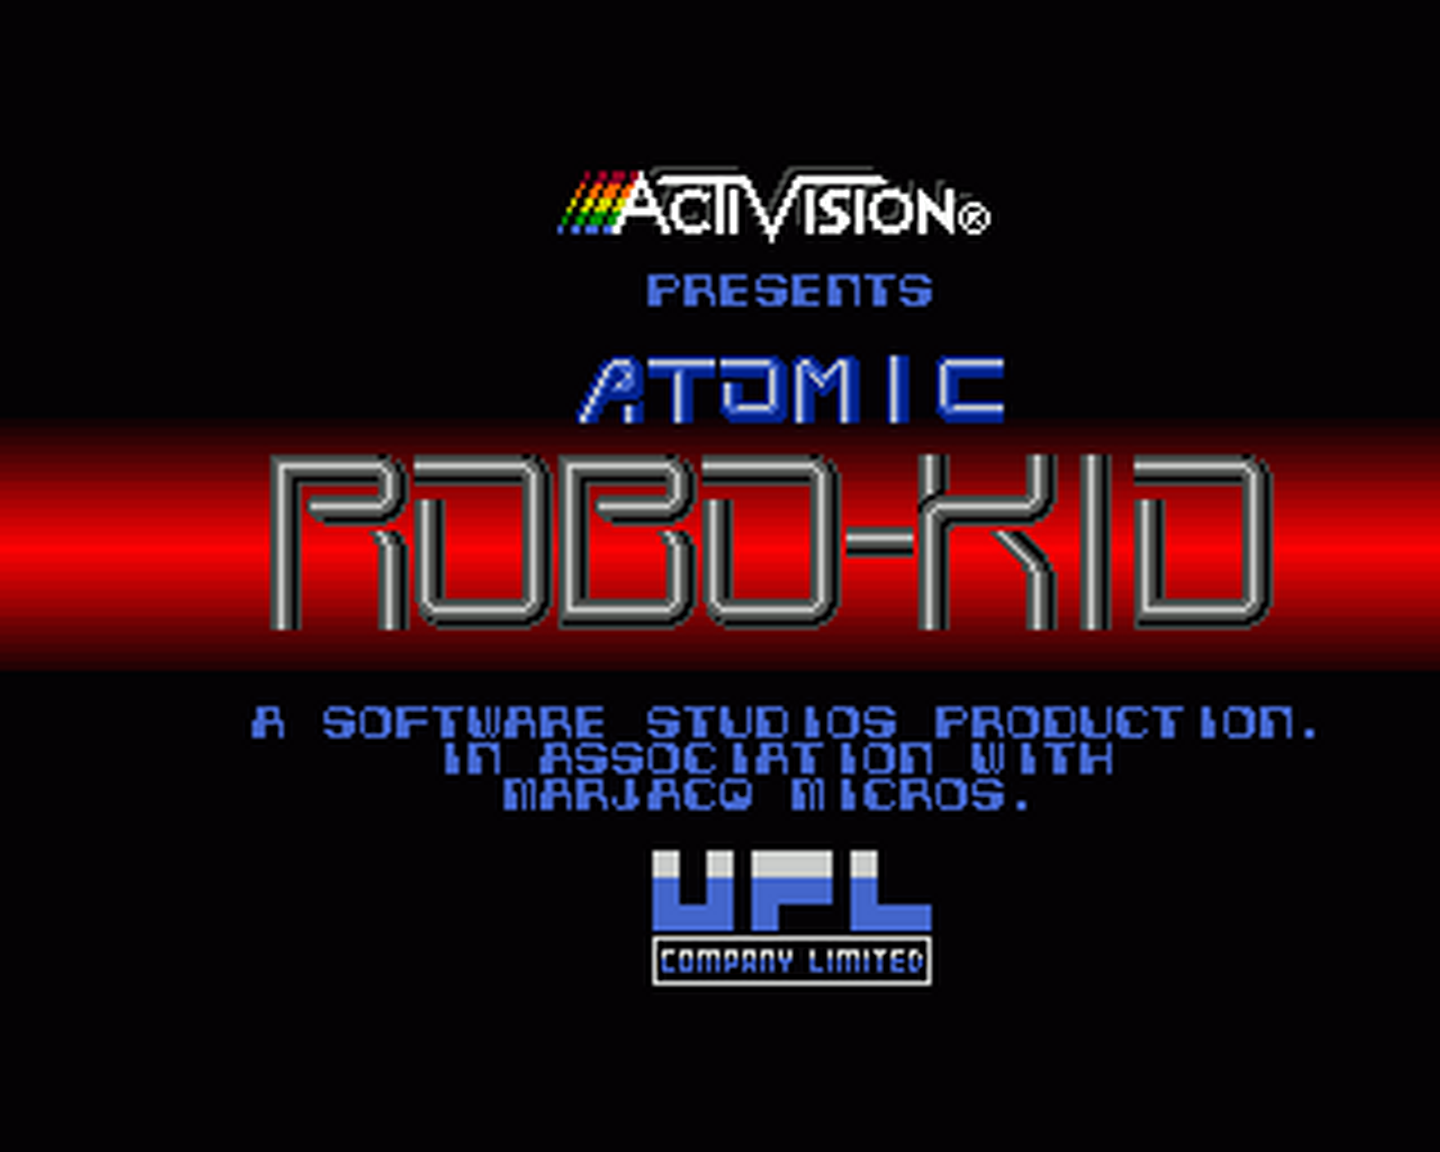 Amiga GameBase Atomic_Robo-Kid Activision 1990